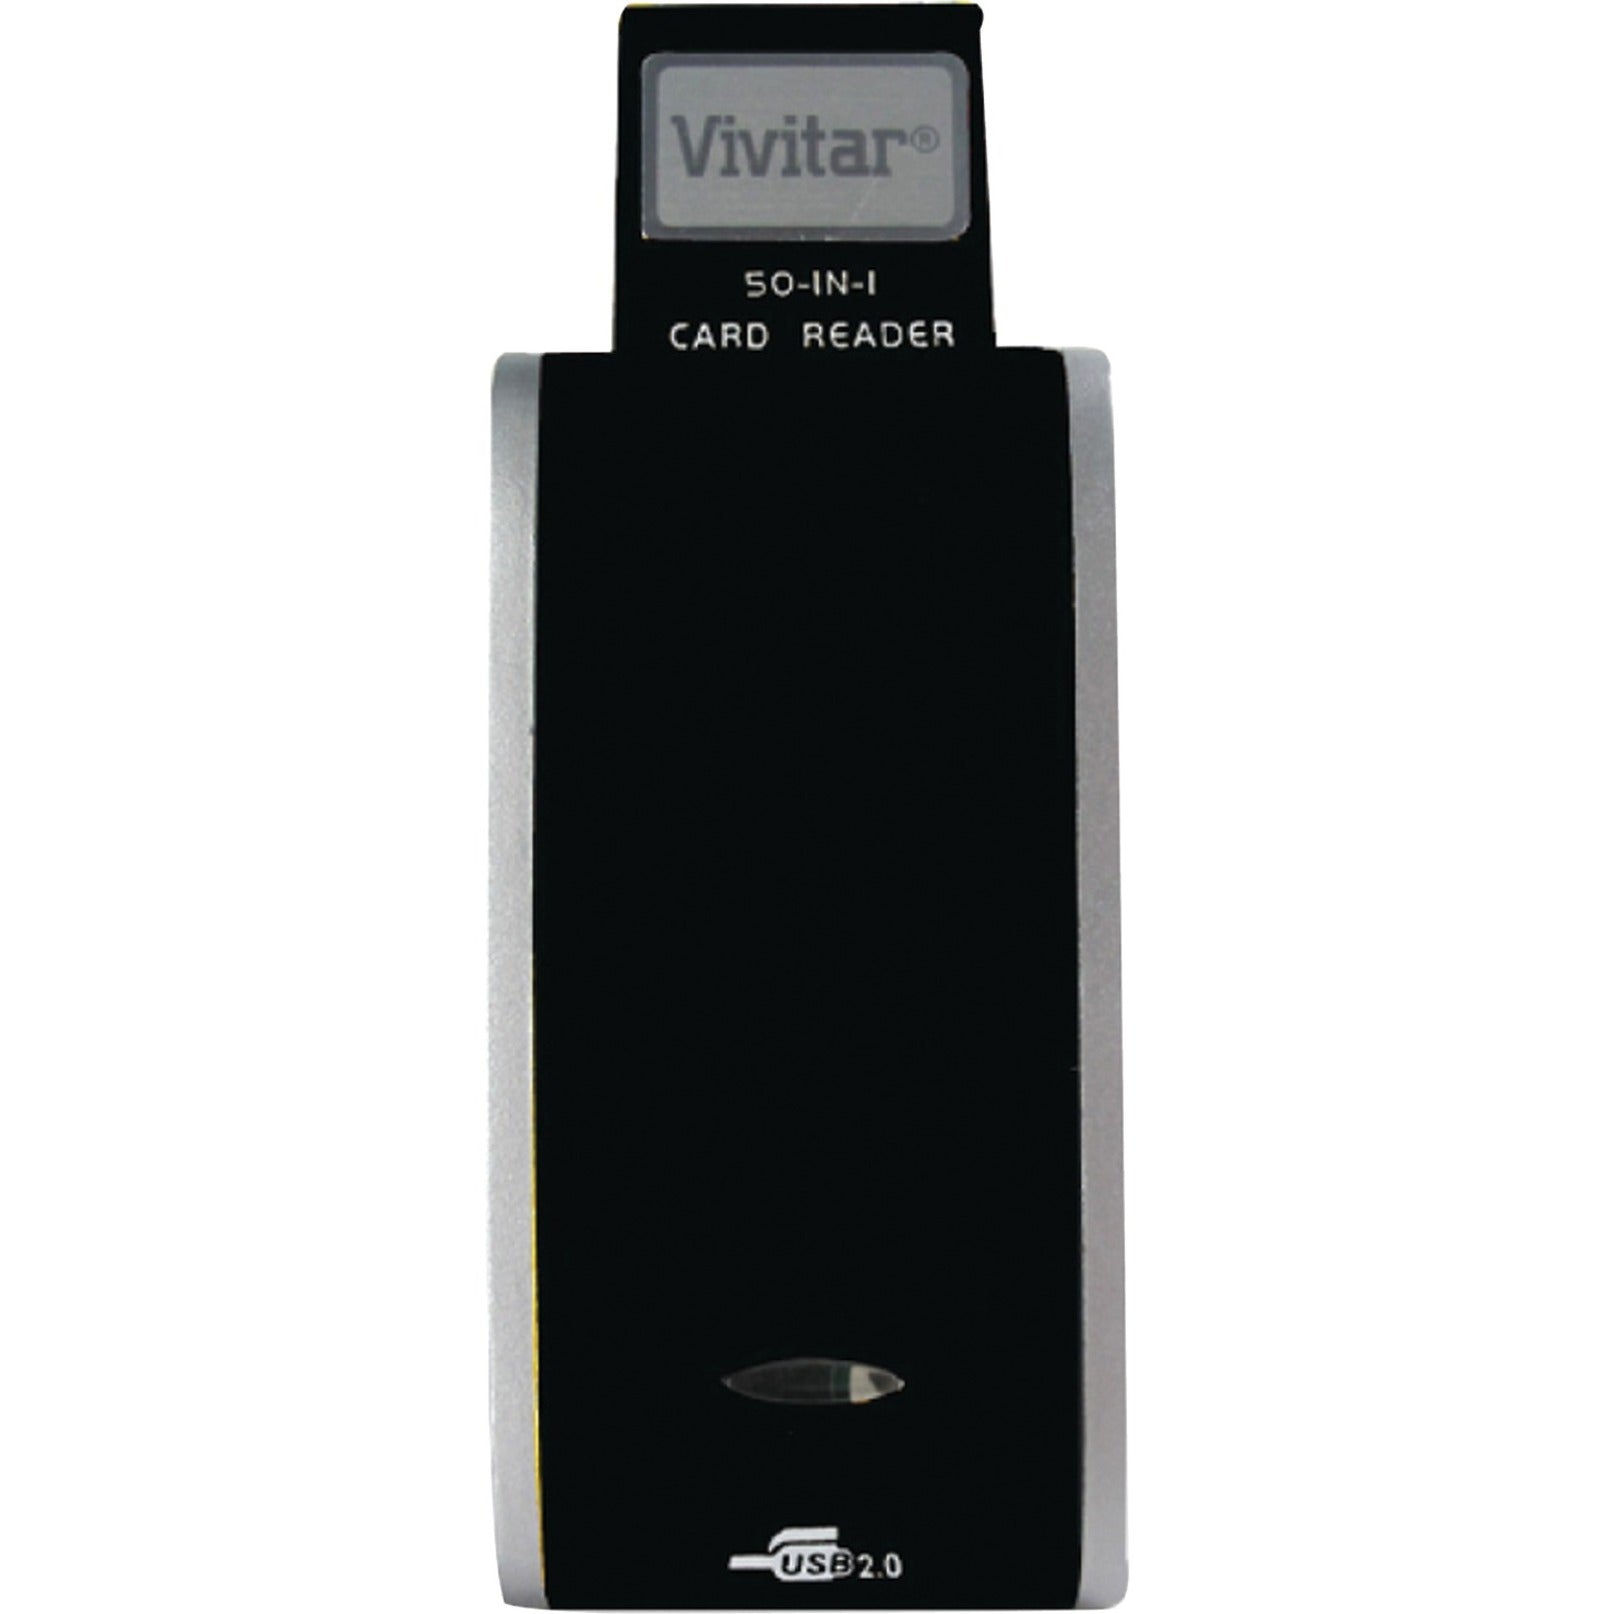 Vivitar VIV-RW-5000-BLK RW-5000 Flash Reader 50-in-1, USB 2.0, Black